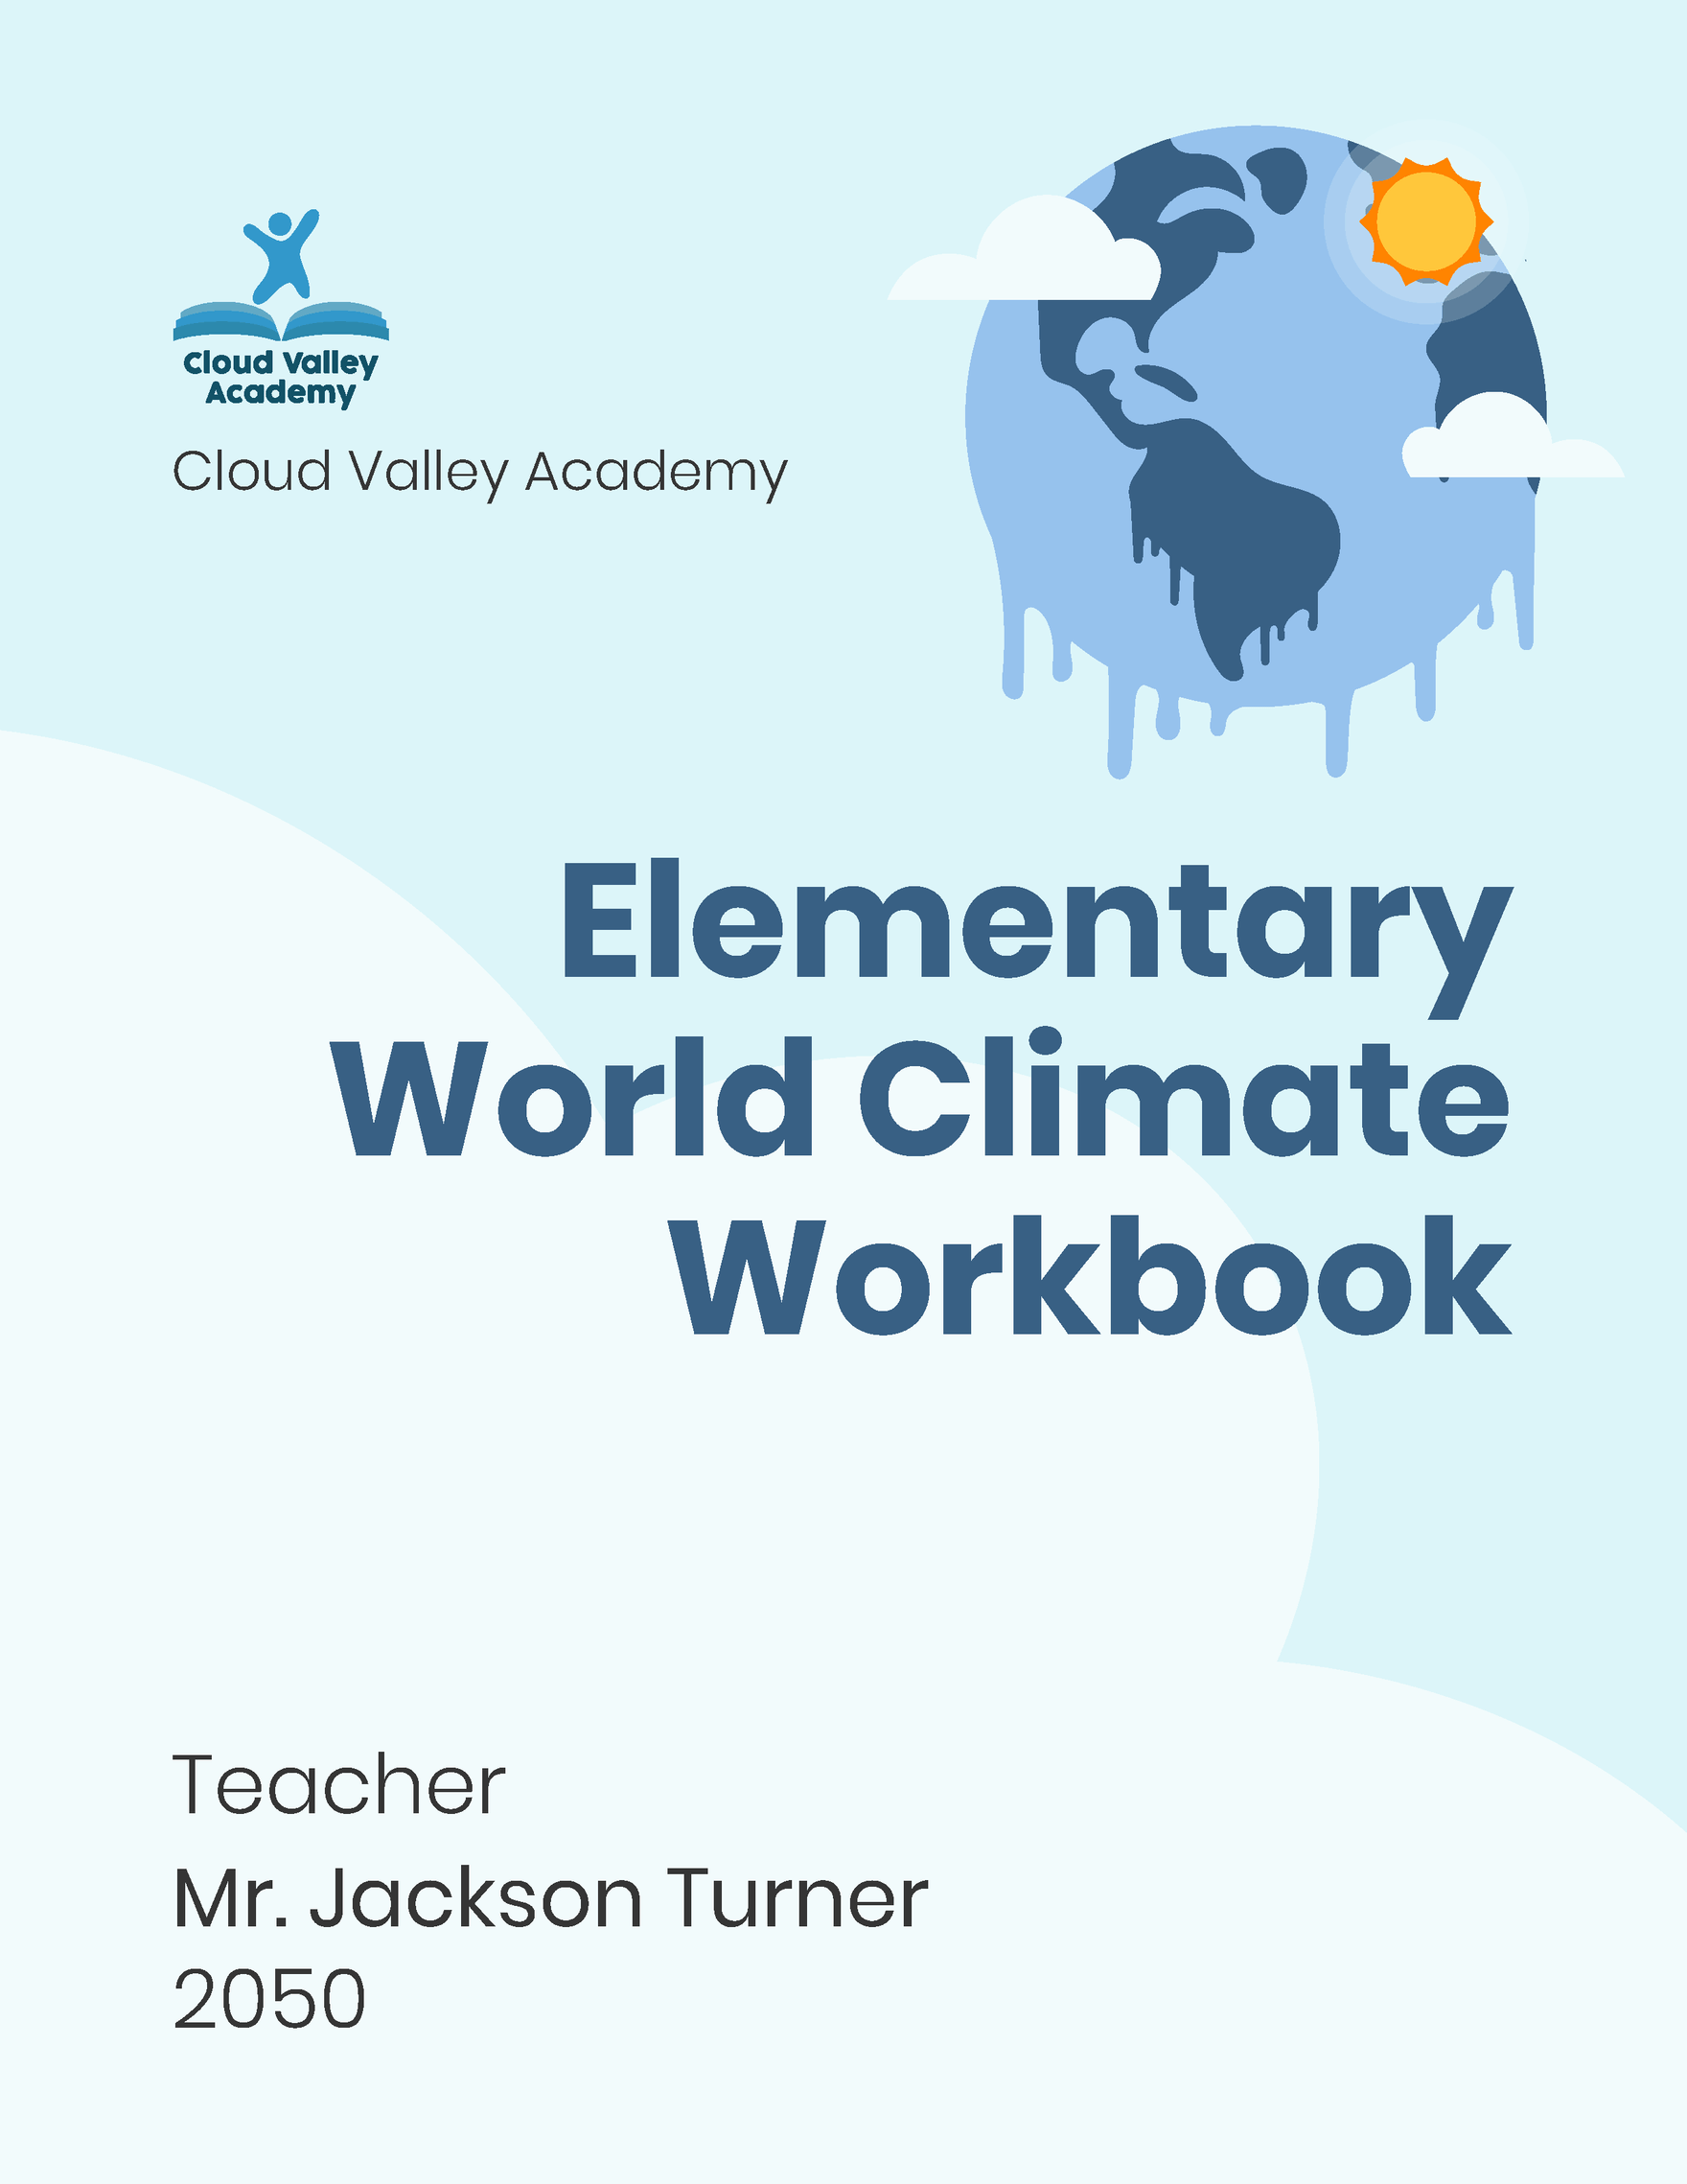 World Climate Workbook